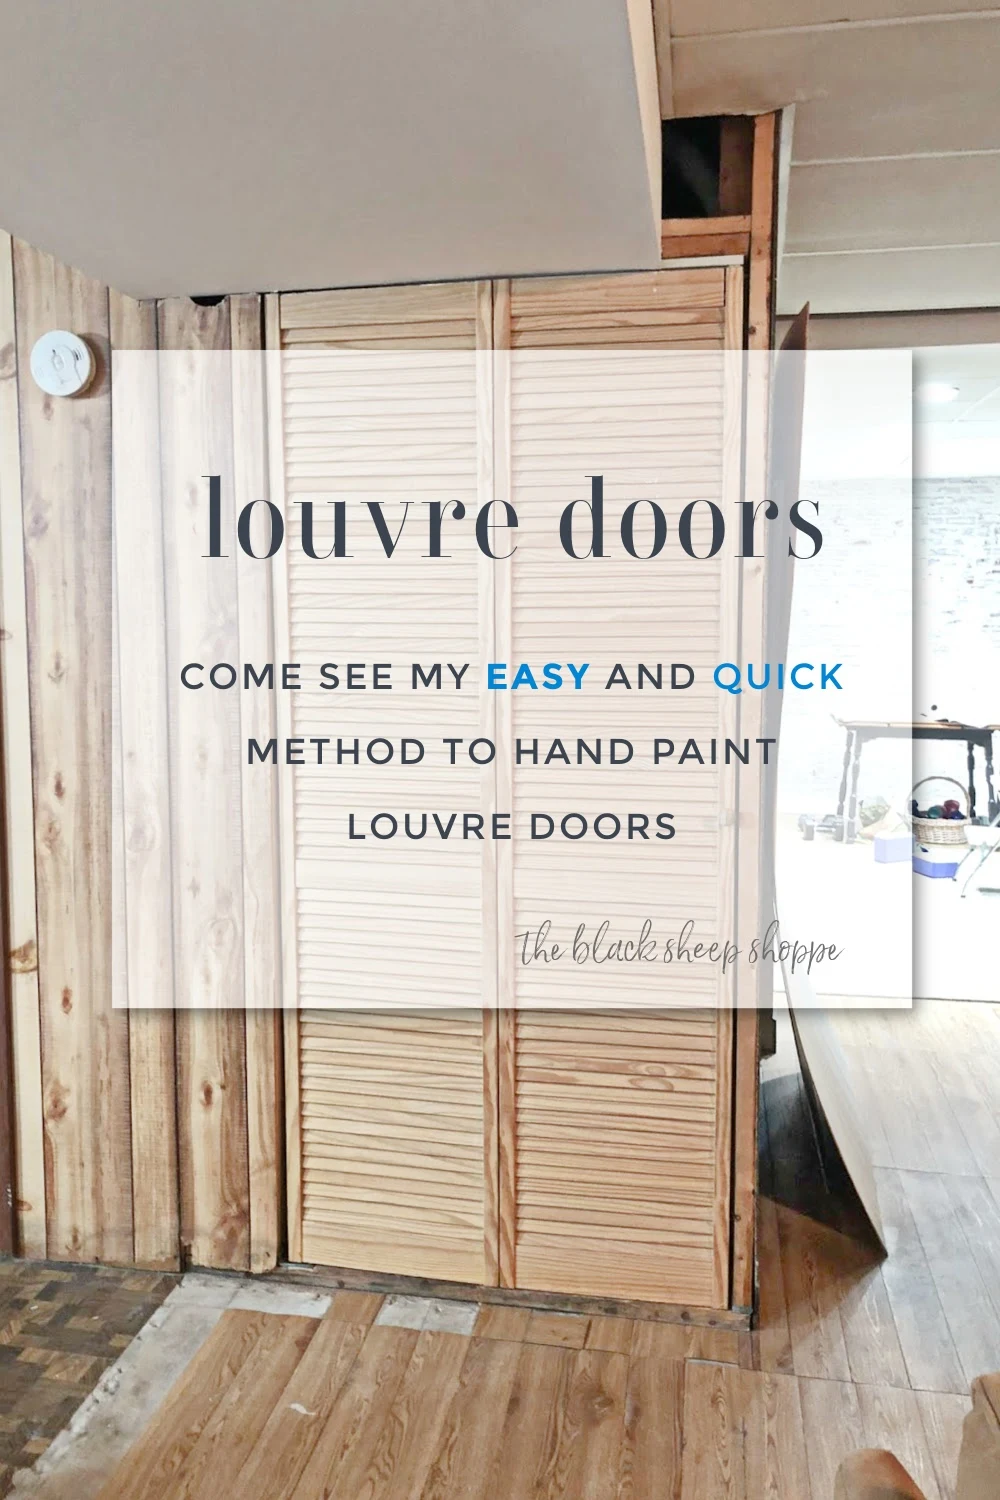 Tutorial quick and easy method to paint louvre bifold doors.